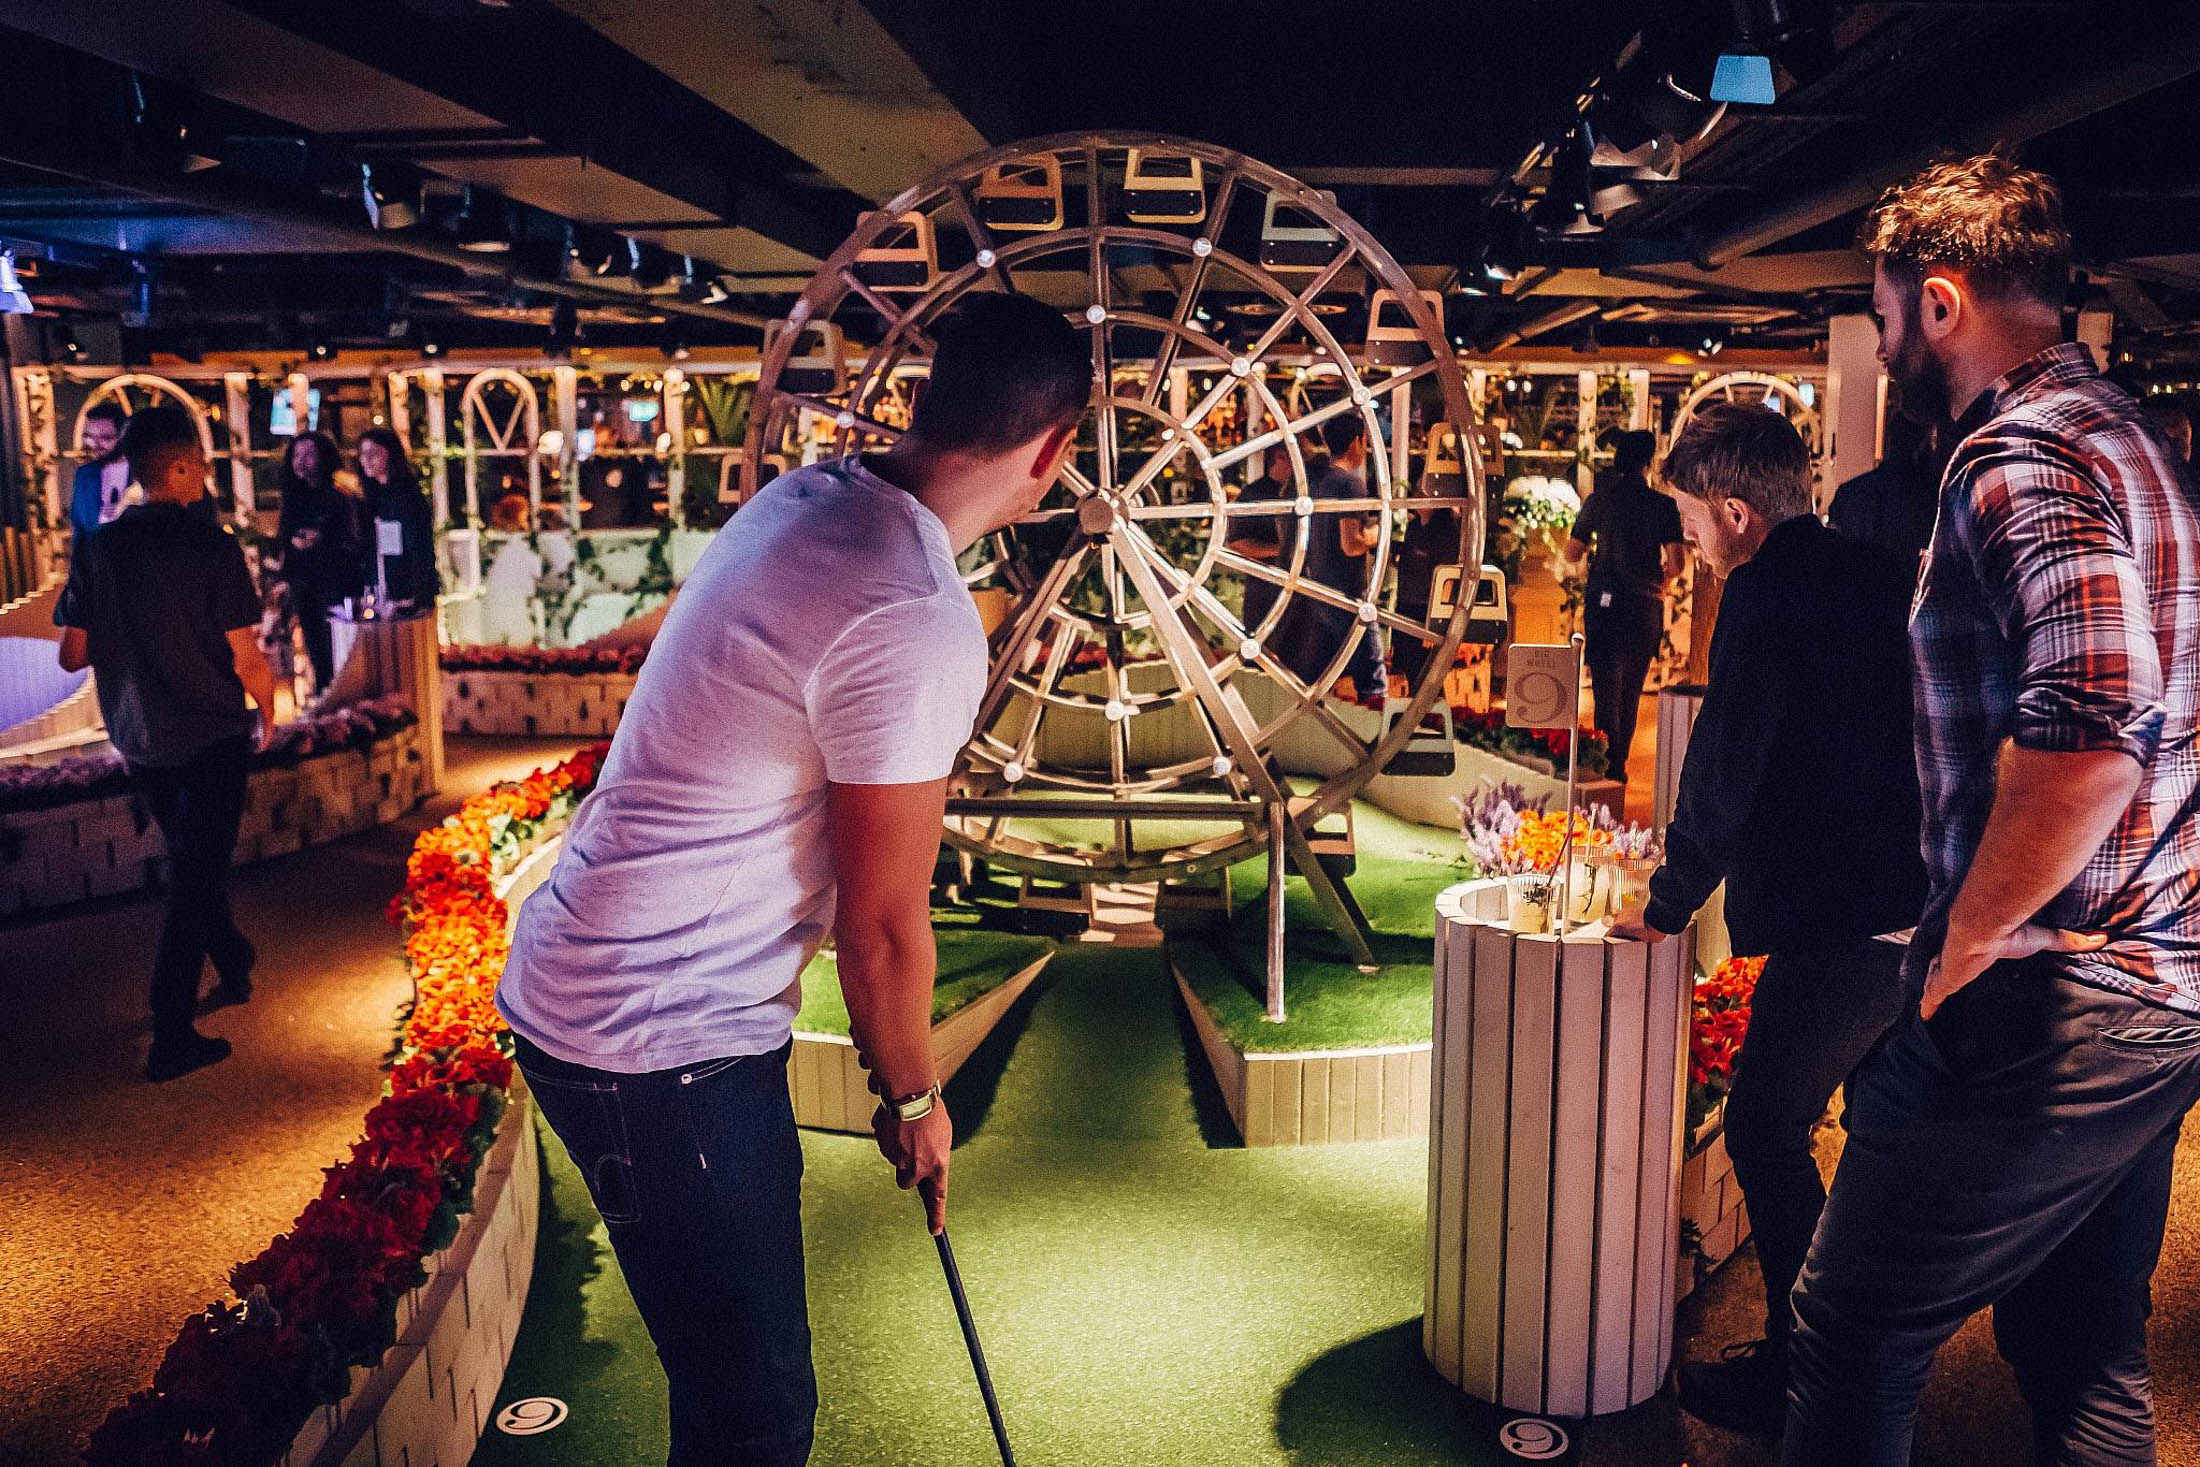 Indoor Crazy Golf Swingers Mini Golf to Open in NYC This Summer image